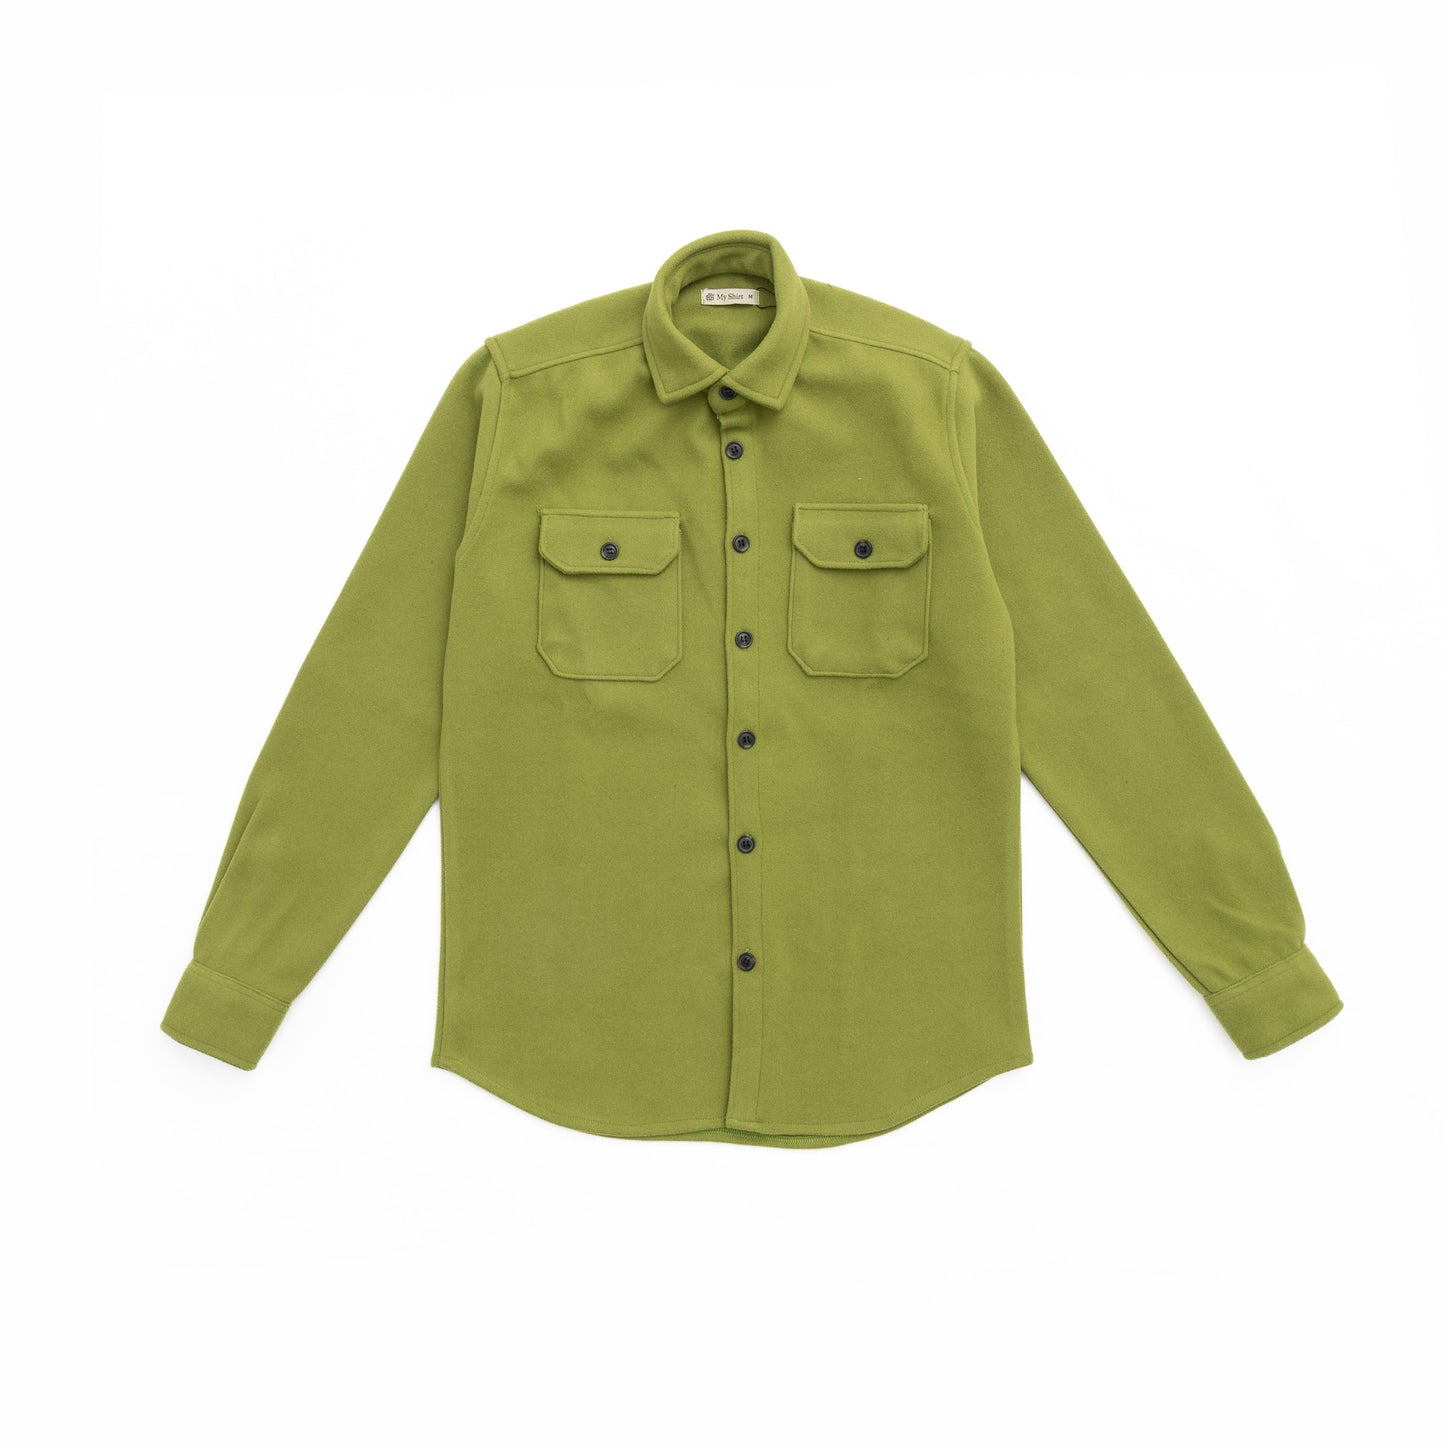 Lime green plain wool shirt